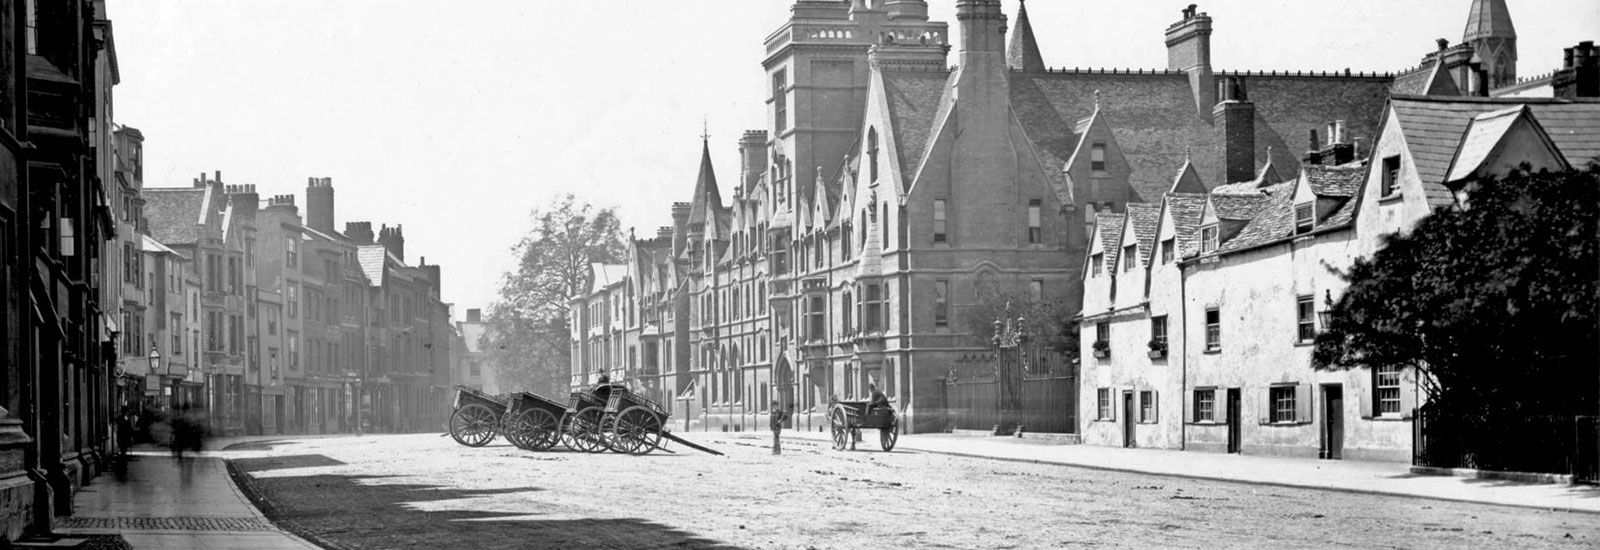 Balliol College, 1870s